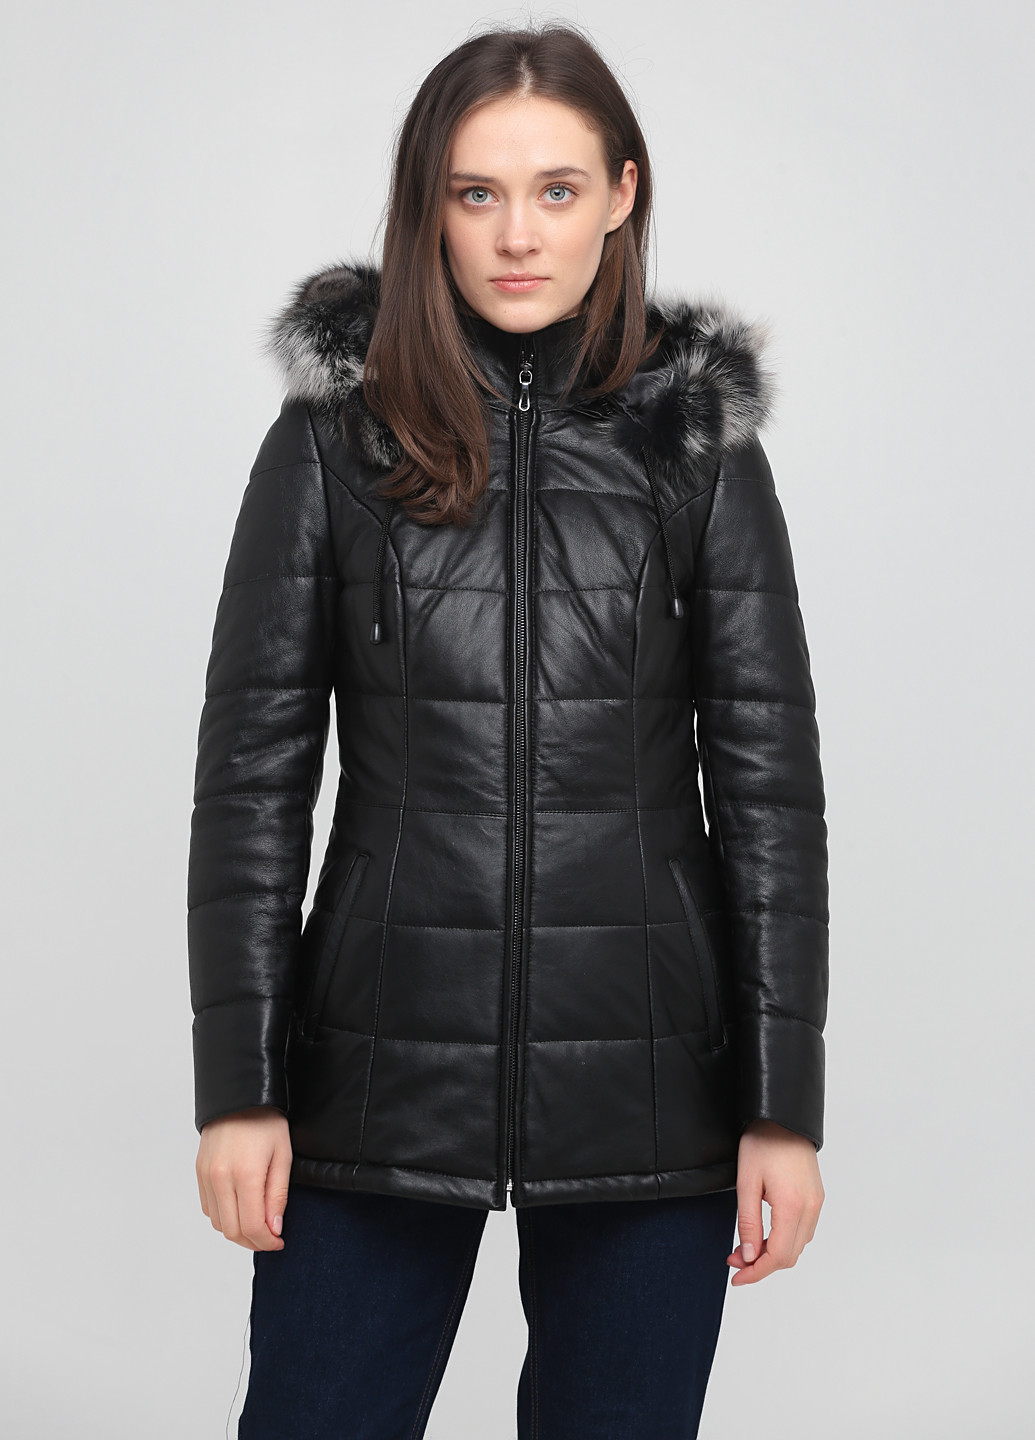 Черная зимняя куртка Leather Factory